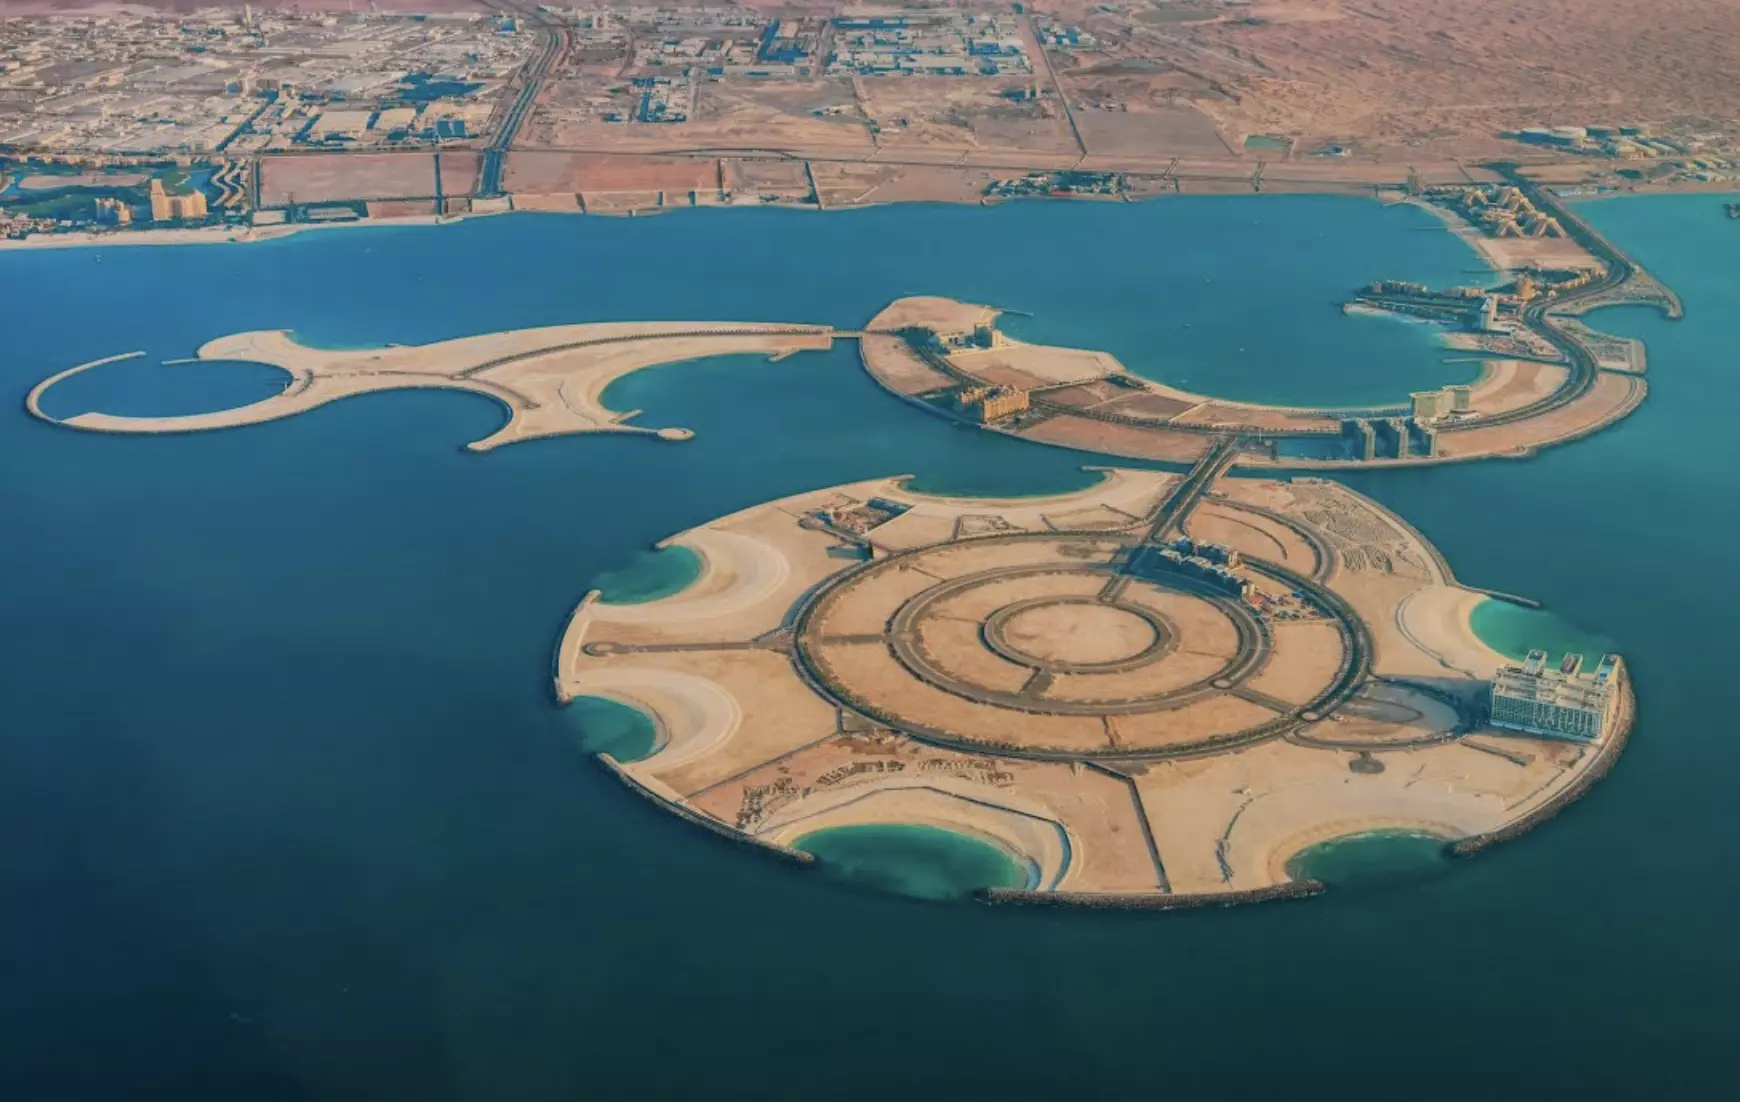 Wynn Resorts confirms opening of first casino in Dubai